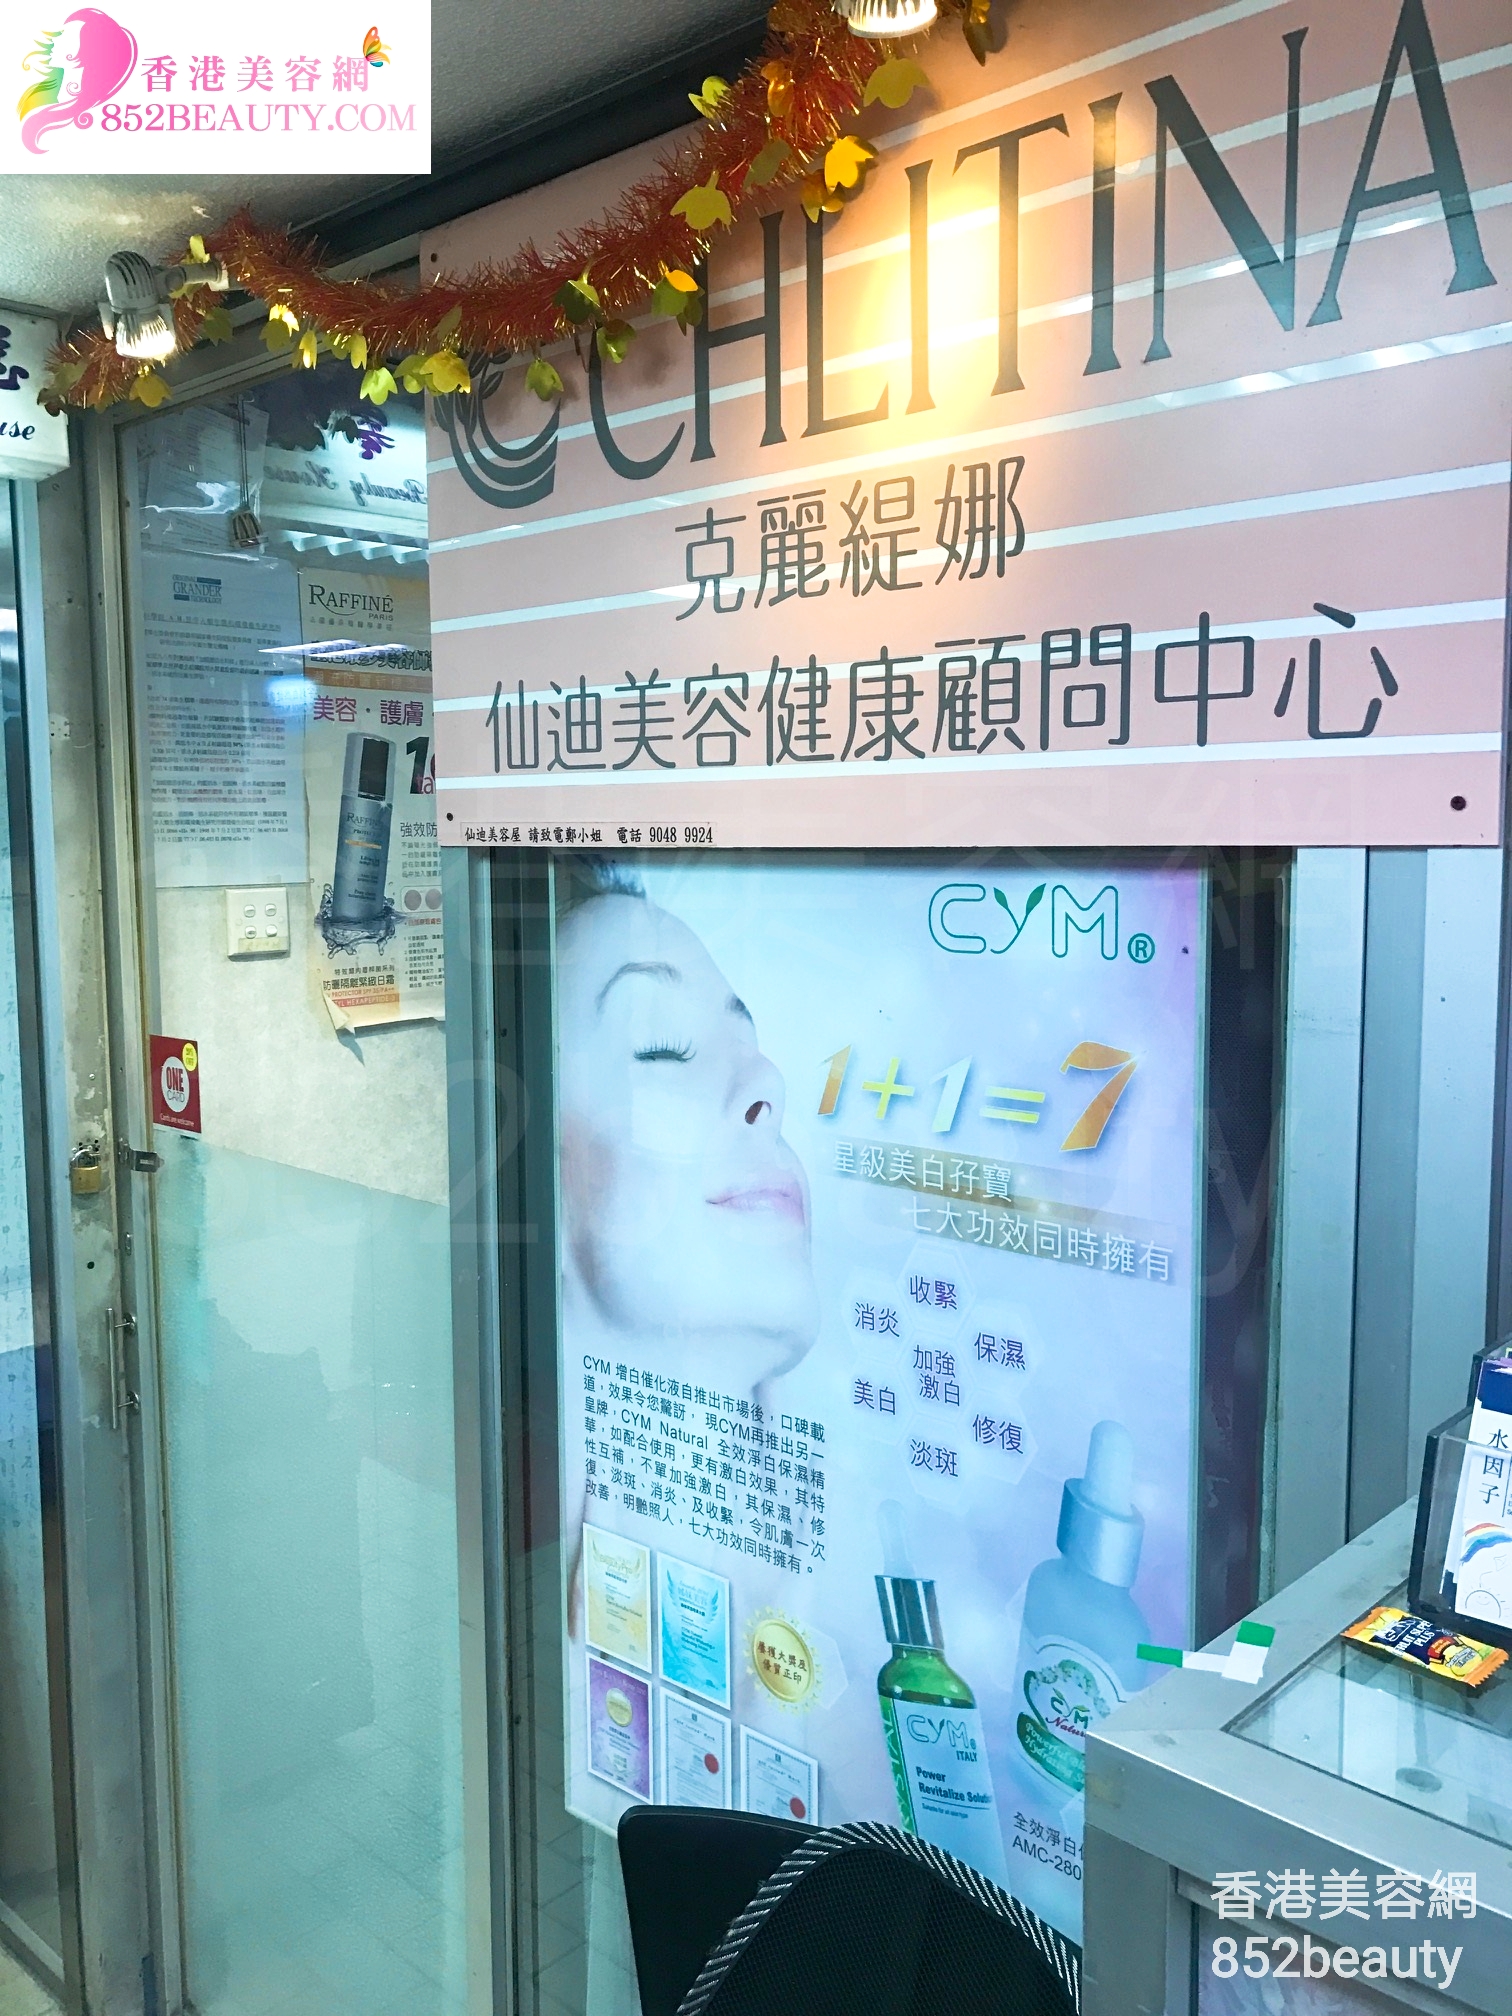 Facial Care: Chlitina 仙迪美容健康顧問中心